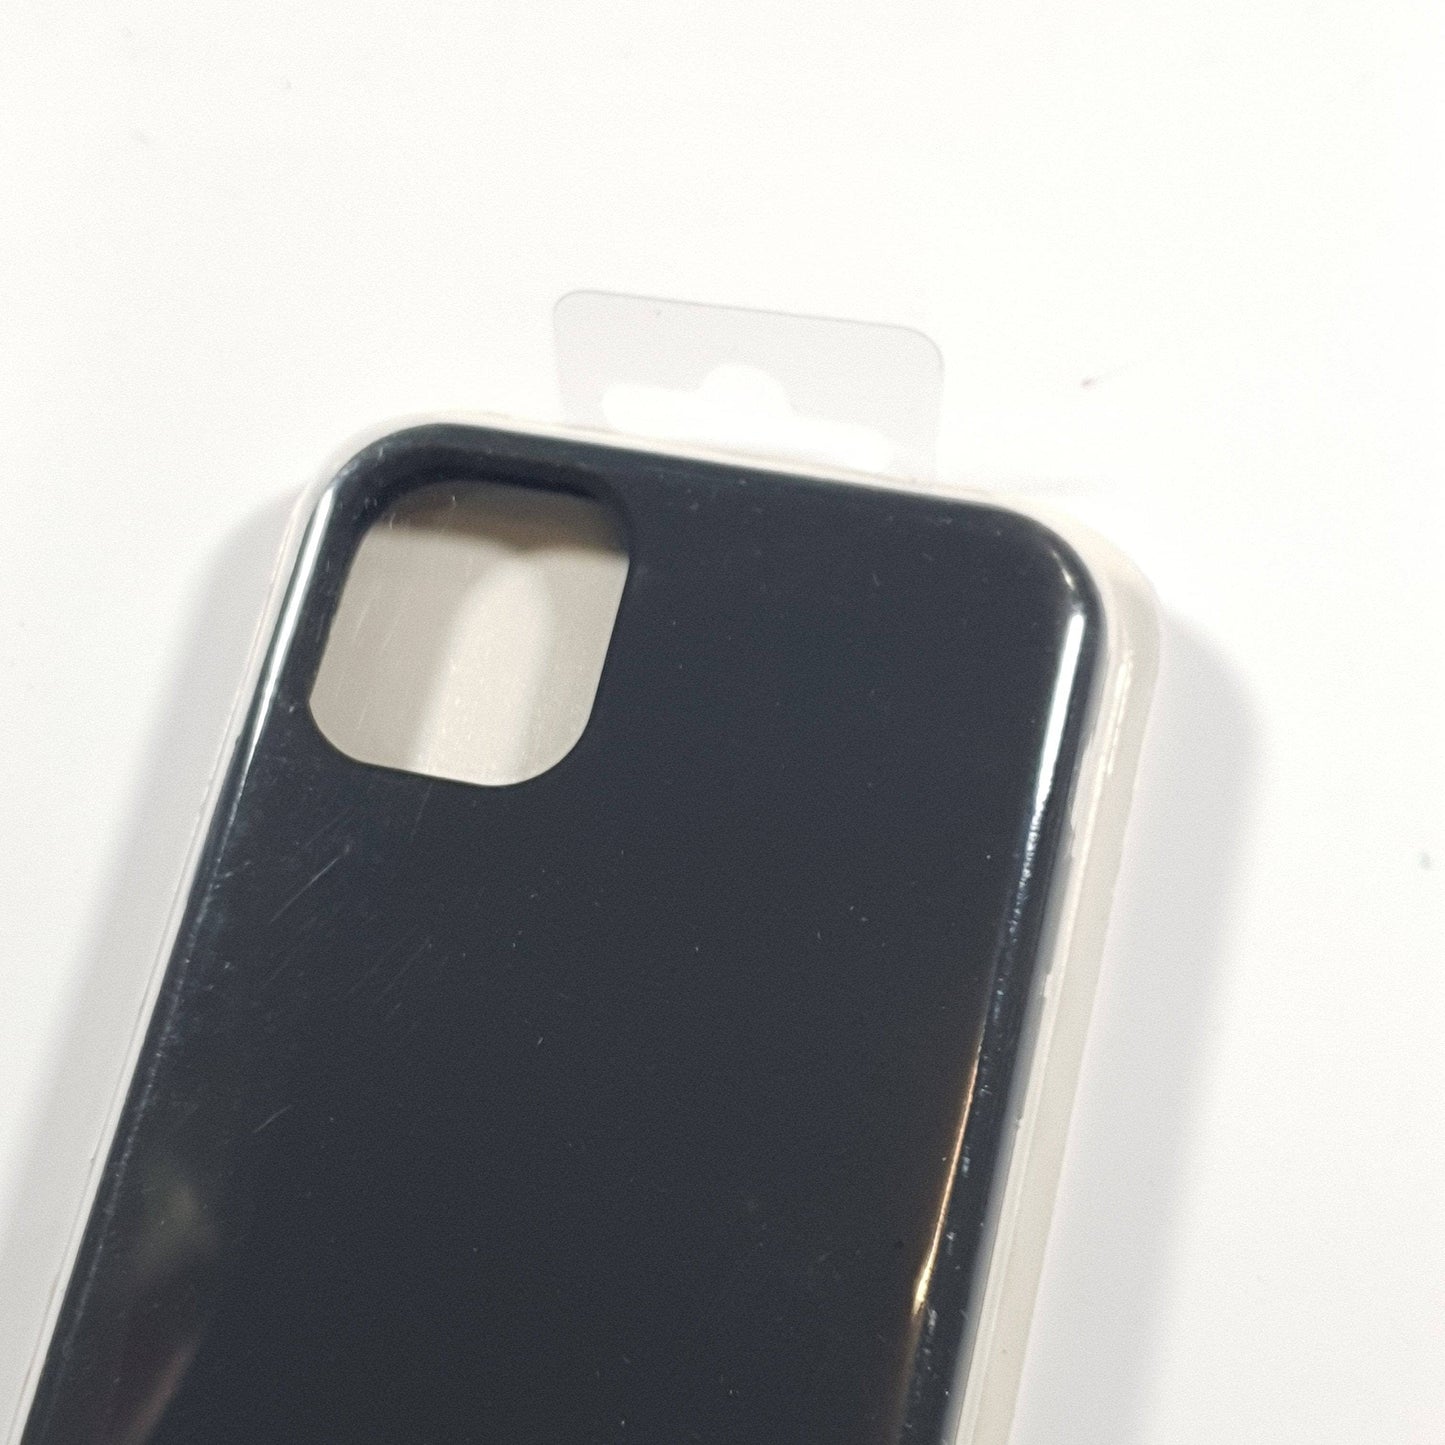 Matt Liquid SIicon Case For iPhone 11 Pro Max Soft Touch Back Skin Rubber-Phone Case-Generic-www.PhoneGuy.com.au